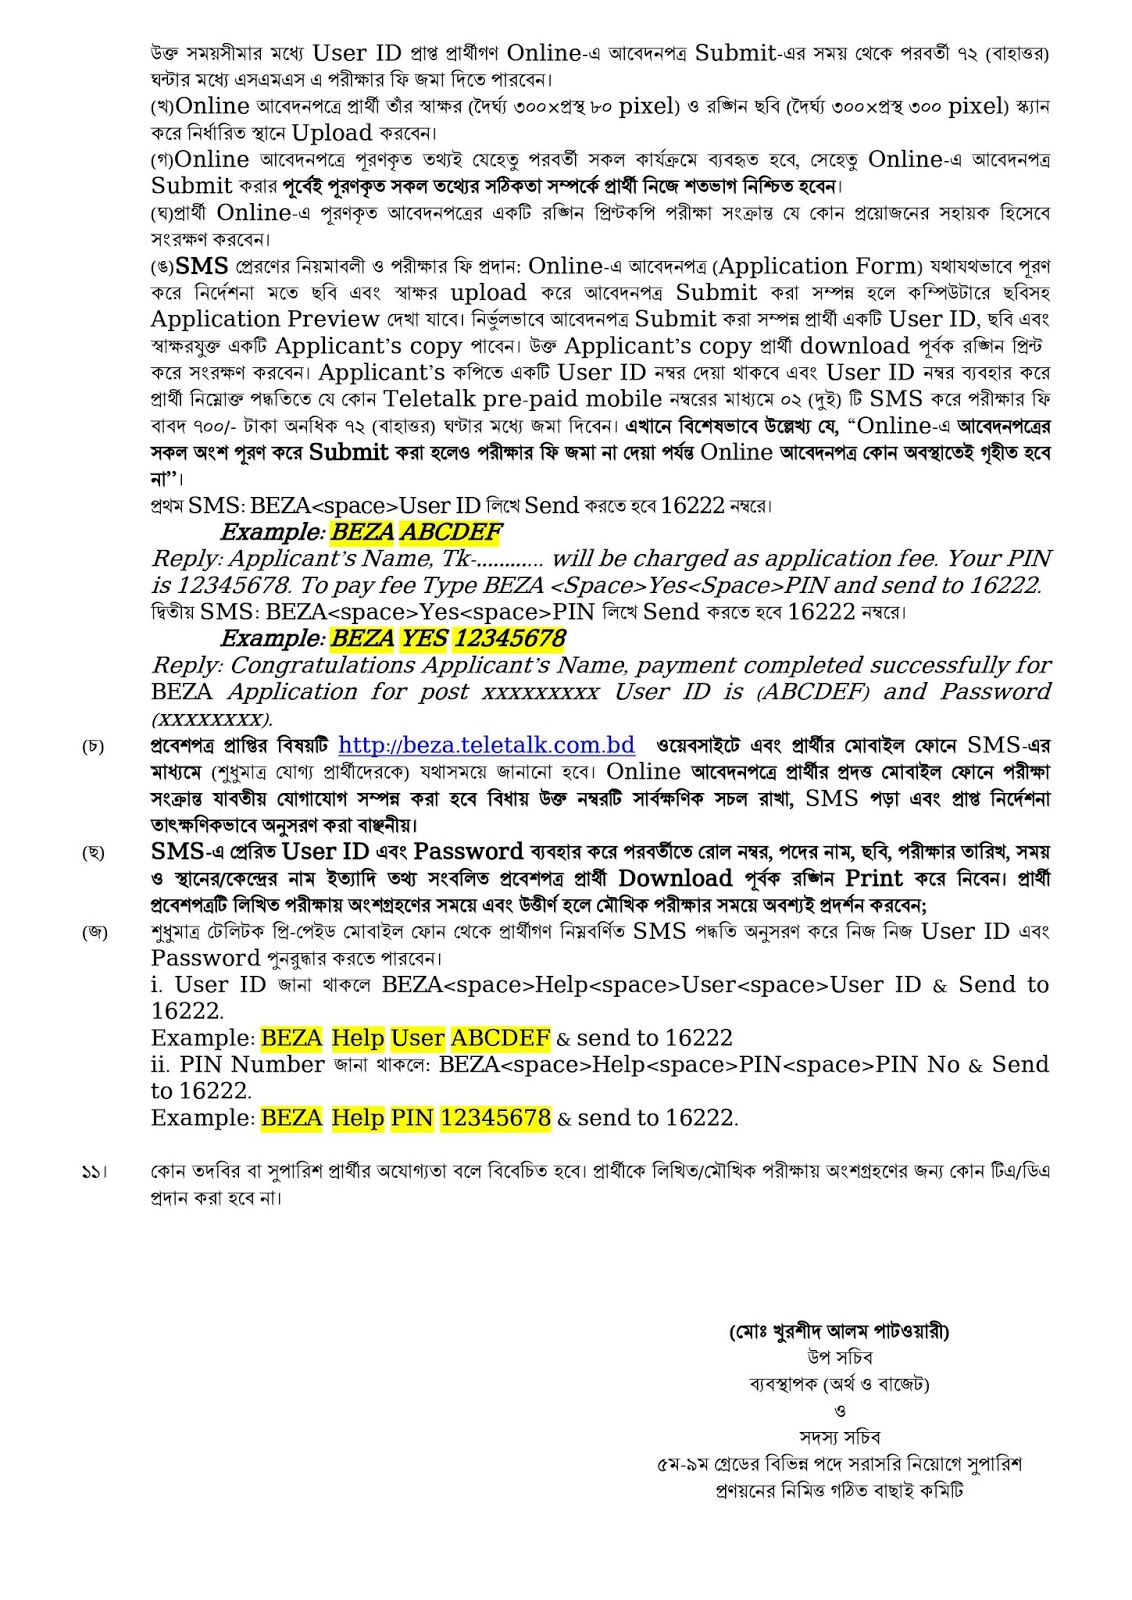 Bangladesh Economic Zones Authority (BEZA) Job Circular 2018